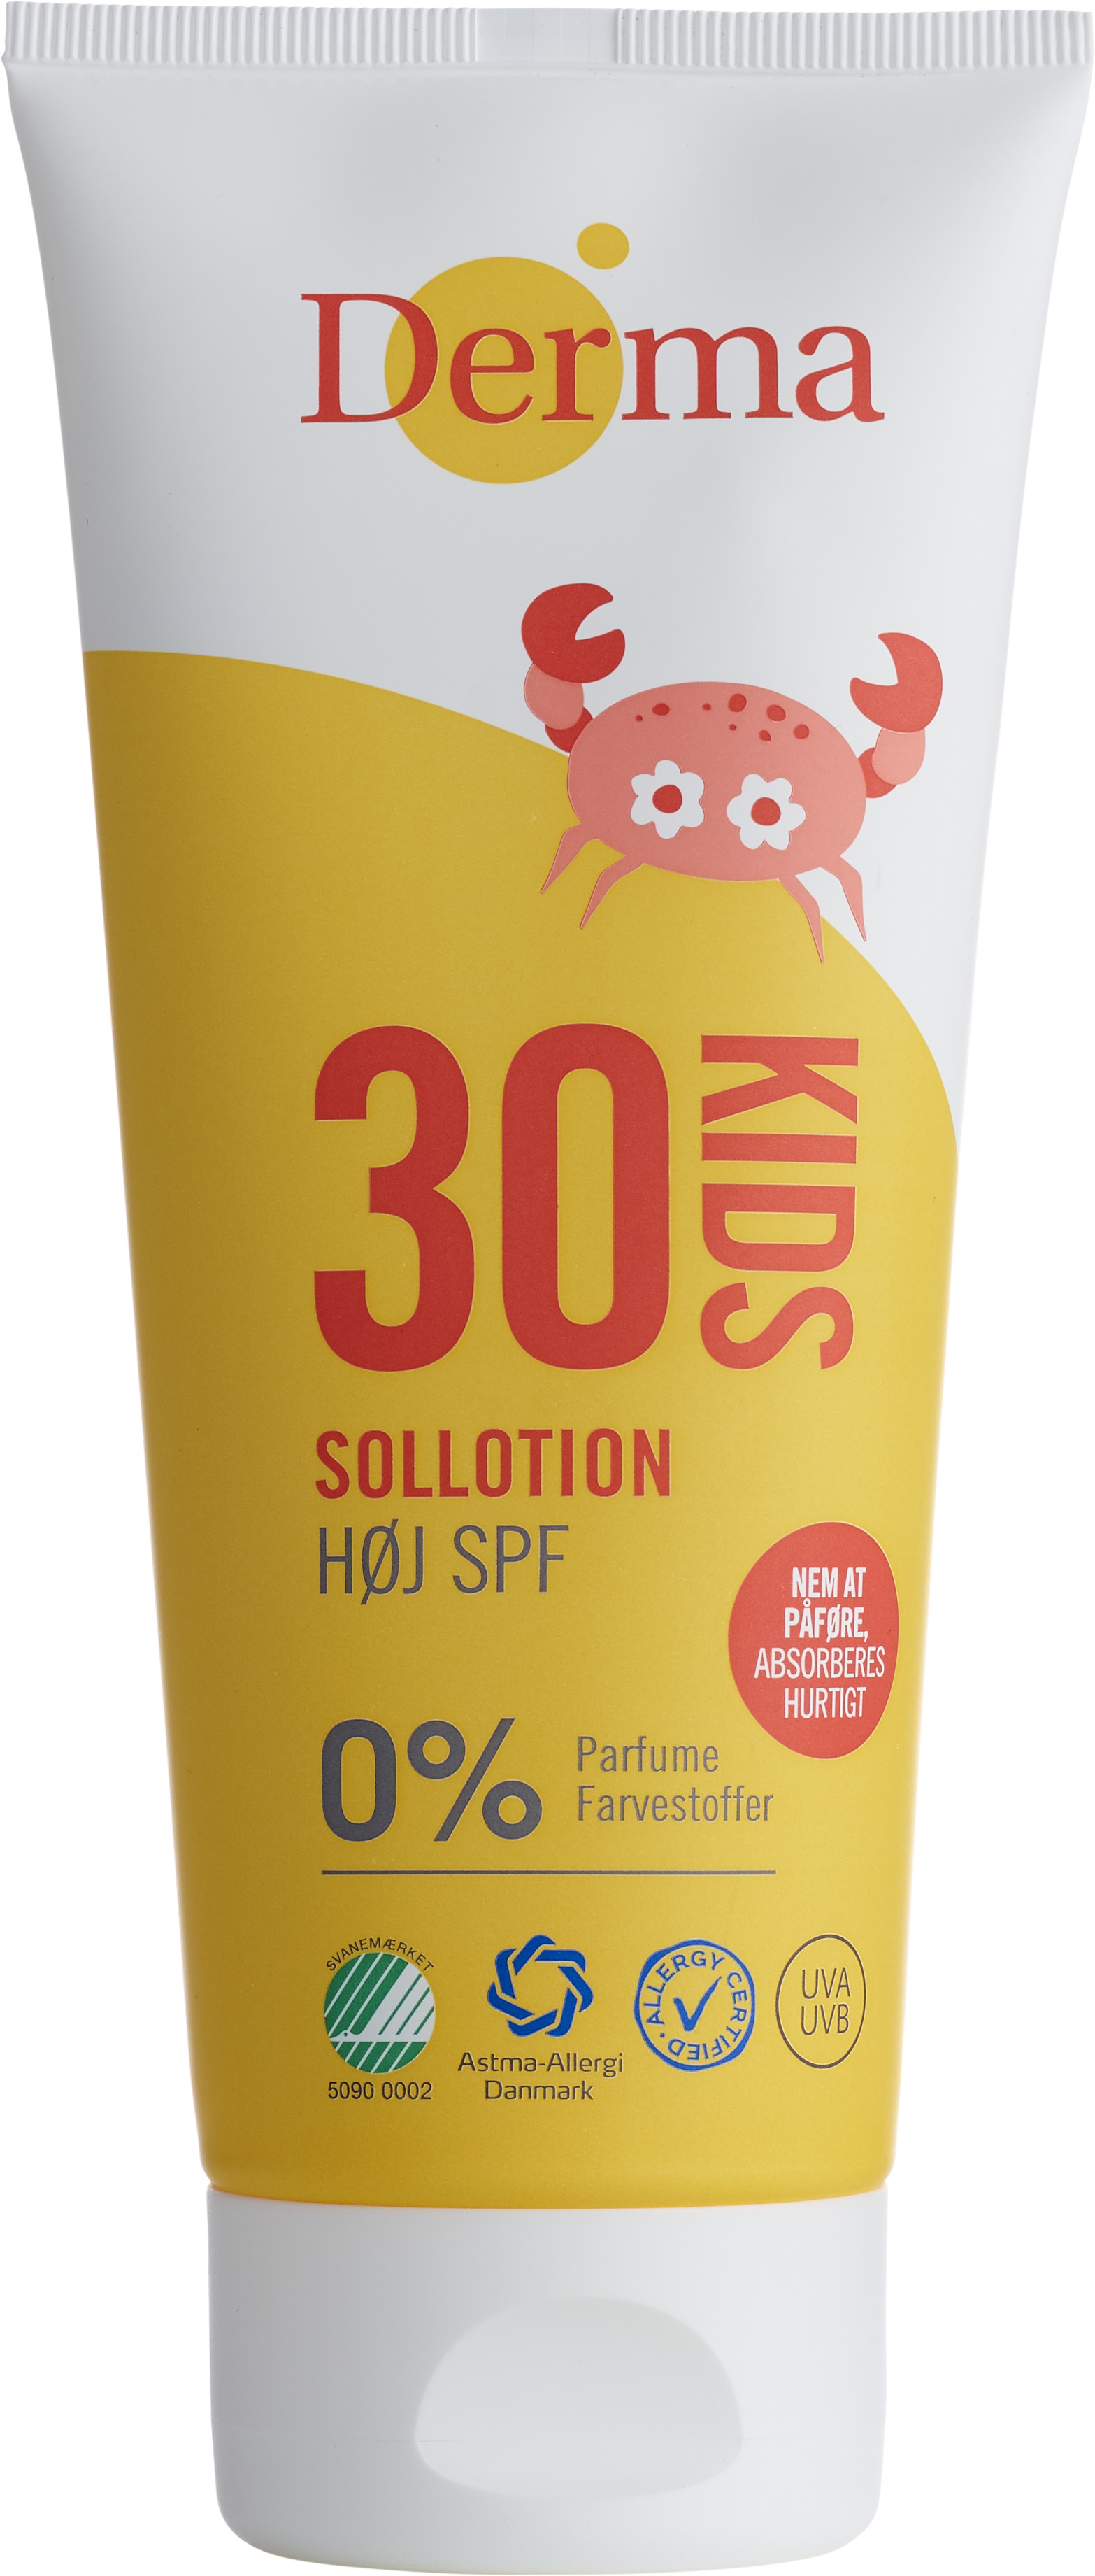 Derma Sun Kids Sollotion Spf 30 200 ml